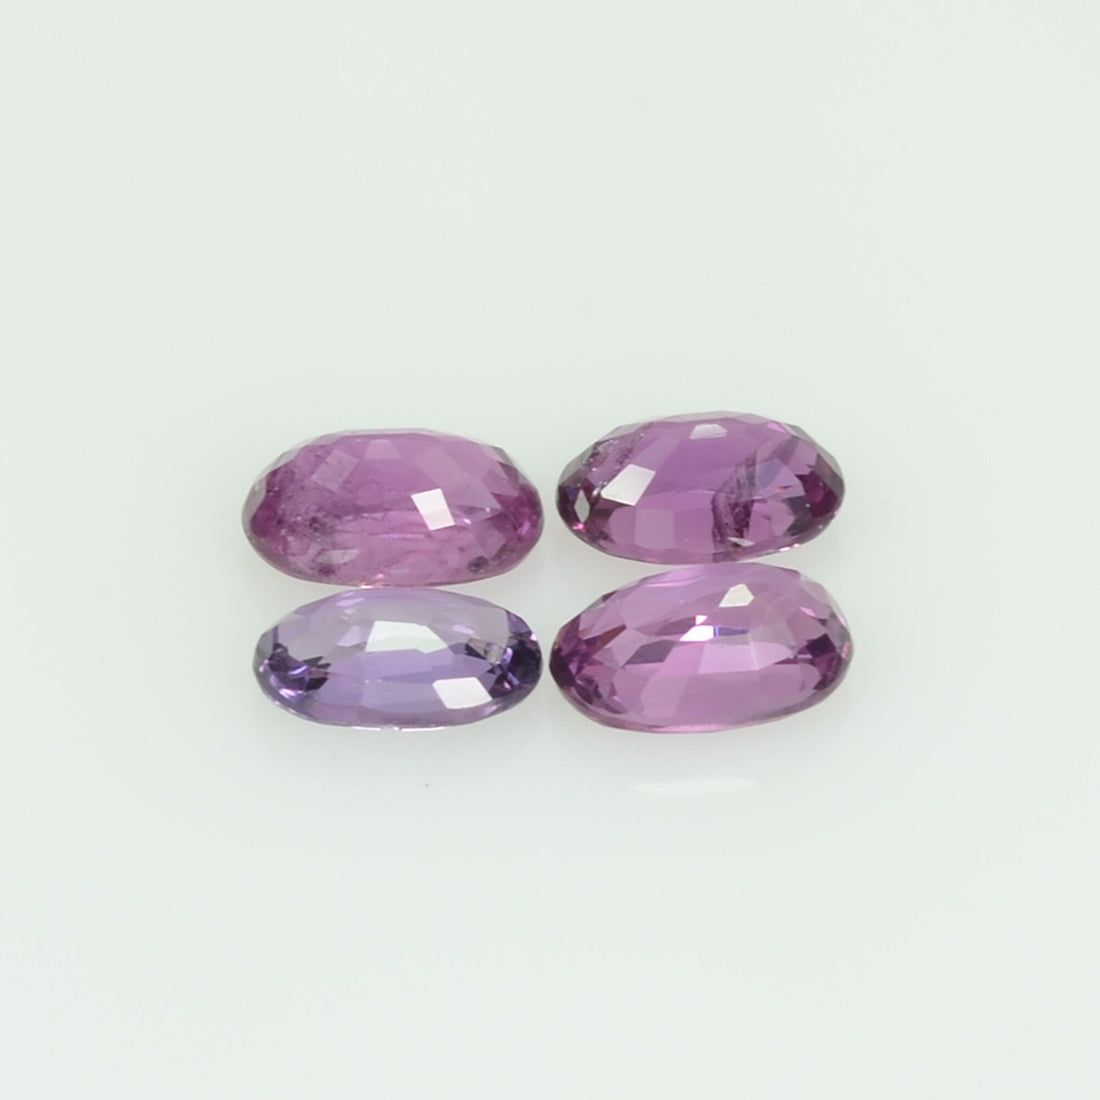 5x3 mm Lot Natural Thai Ruby Loose Gemstone Oval Cut